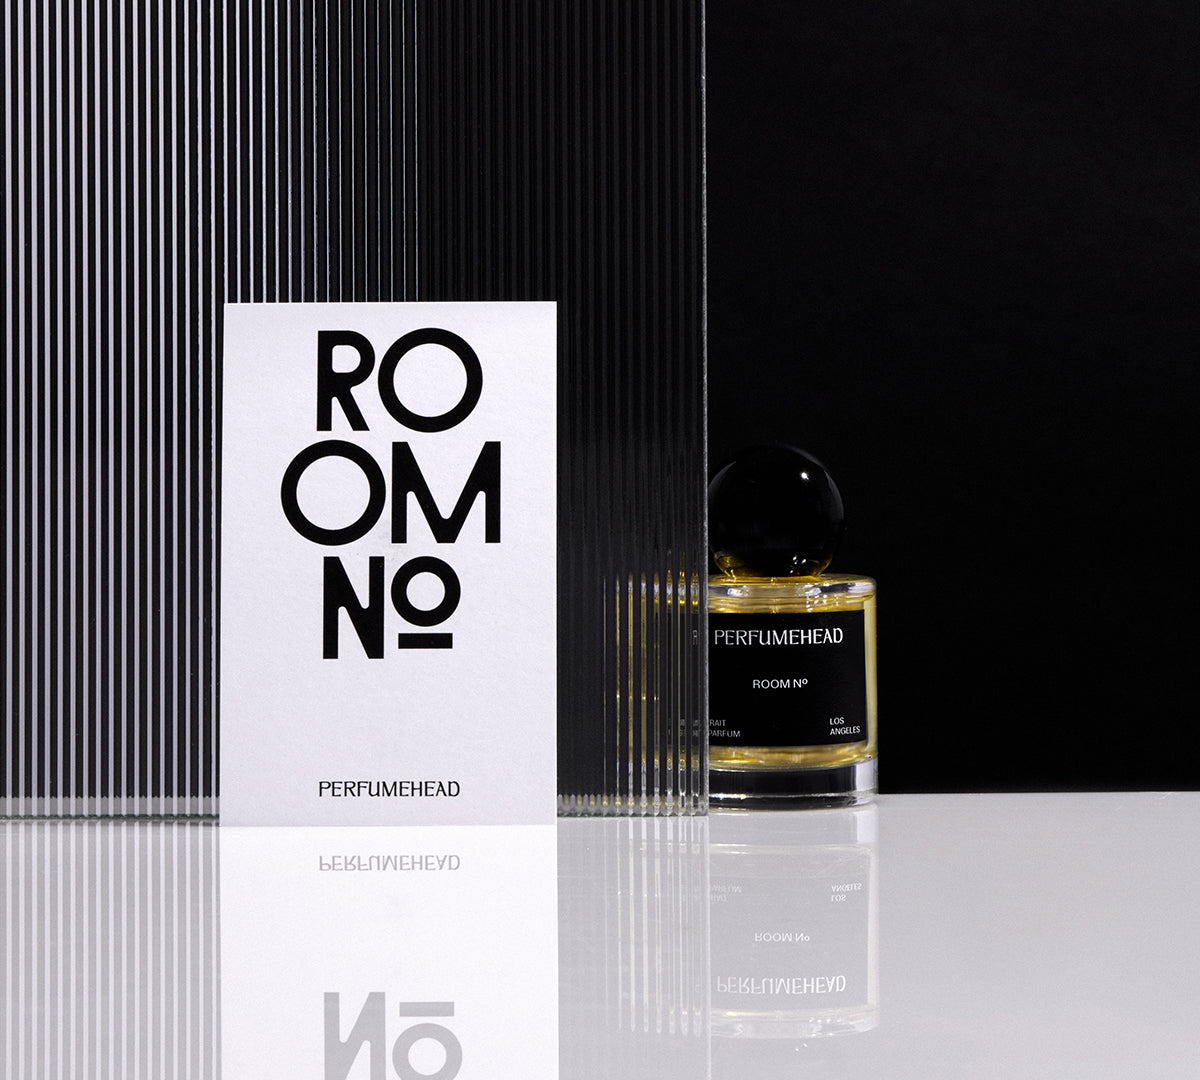 Room No. extrait de parfum by Perfumehead 50ml signature spray bottle and typography.